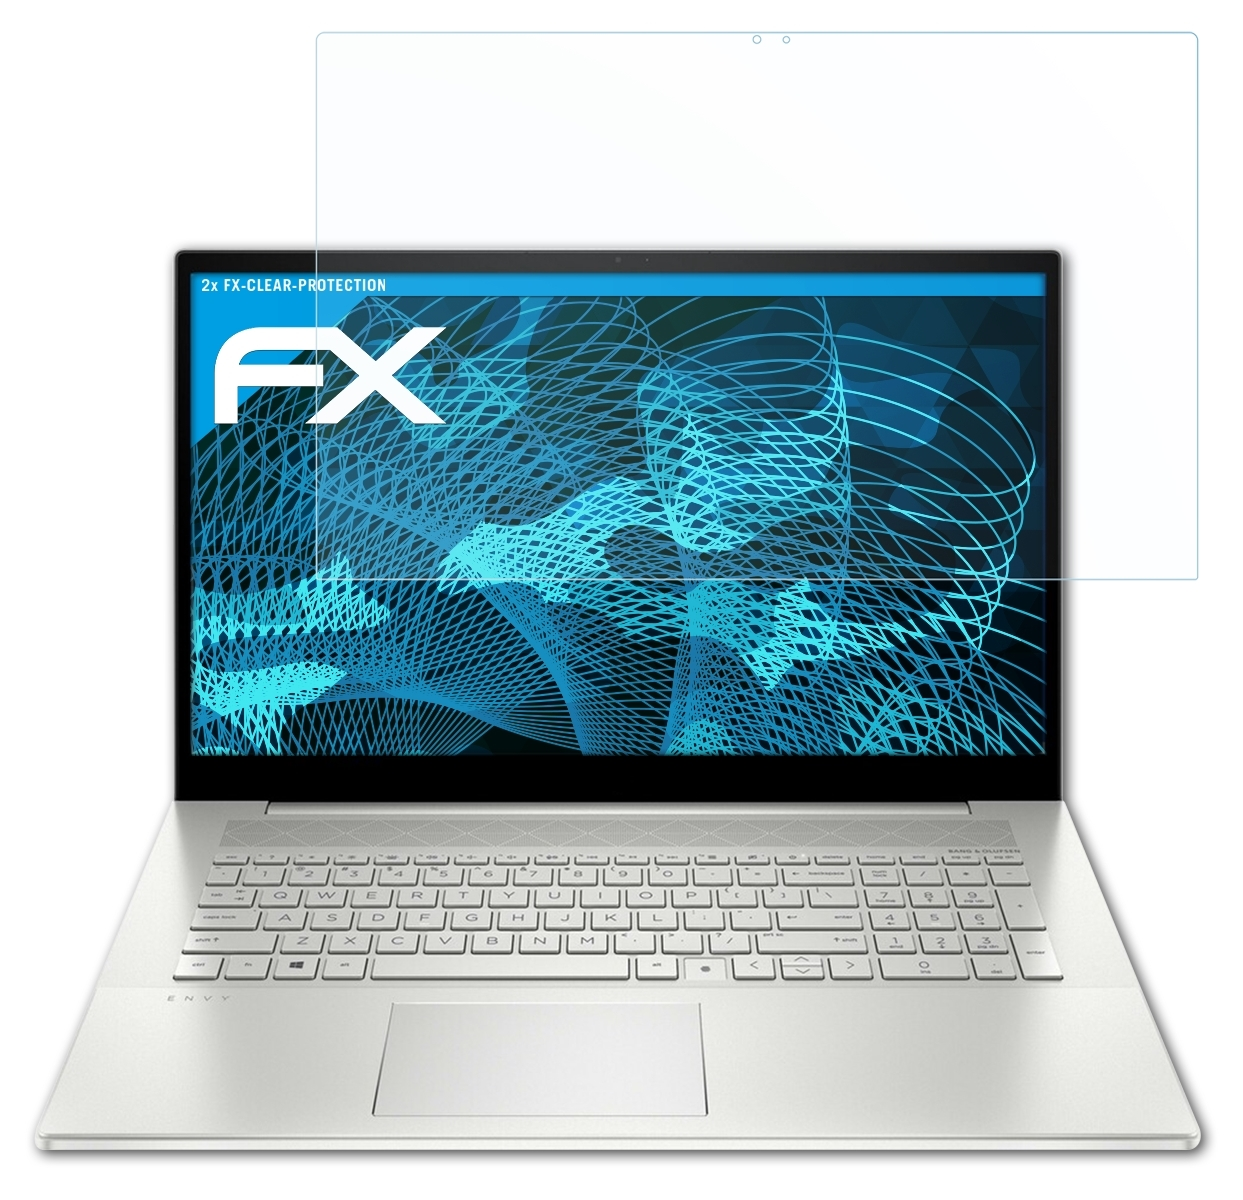 2x Envy 17-cg1656ng) FX-Clear Displayschutz(für HP ATFOLIX